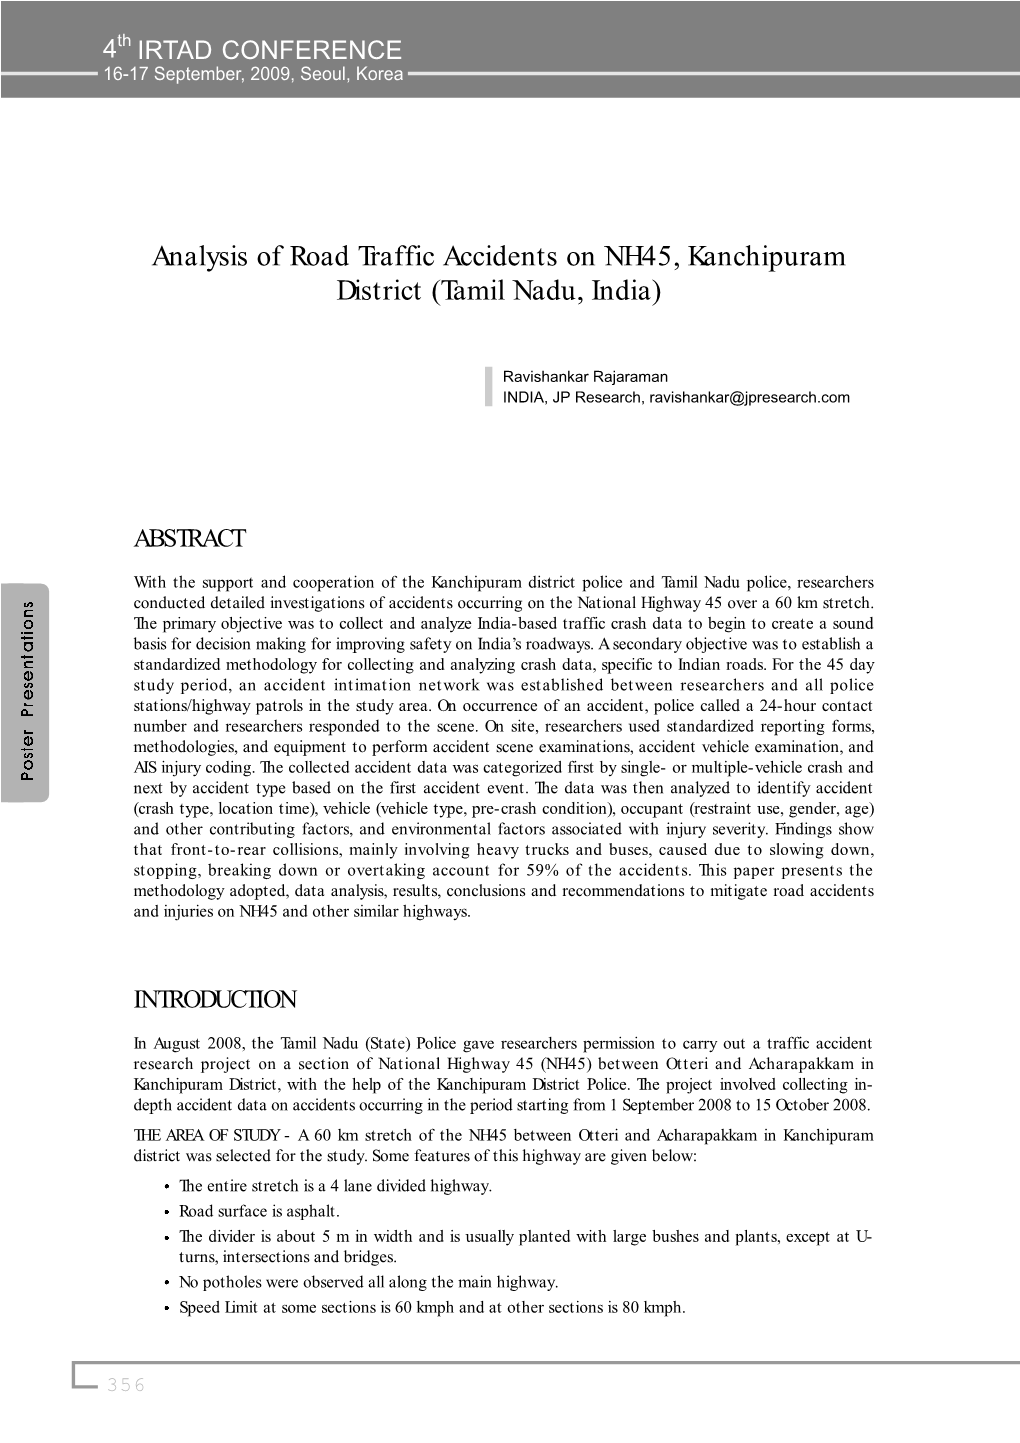 Analysis of Road Traffic Accidents on NH45, Kanchipuram District (Tamil Nadu, India)